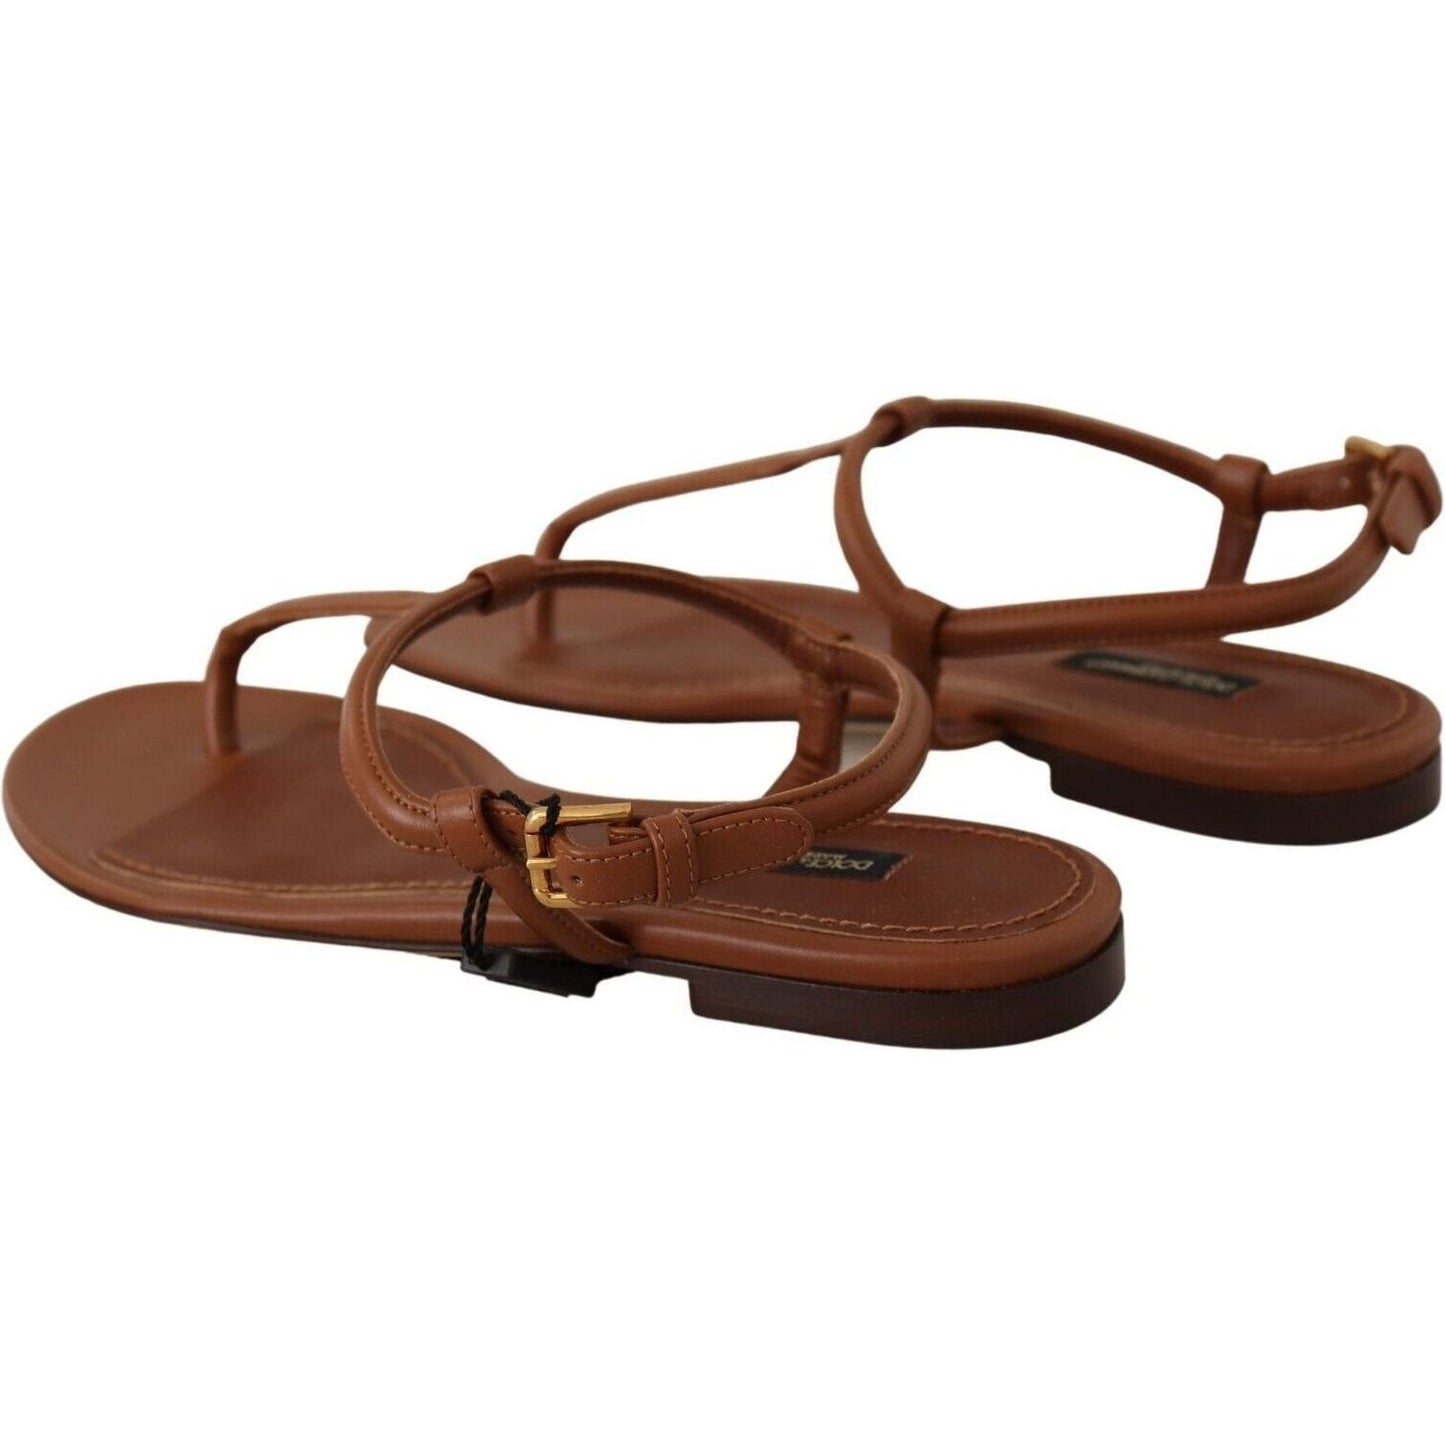 Dolce & Gabbana Elegant Leather T-Strap Flat Sandals brown-leather-t-strap-slides-flats-sandals-shoes s-l1600-38-17-505dffb8-2ea.jpg